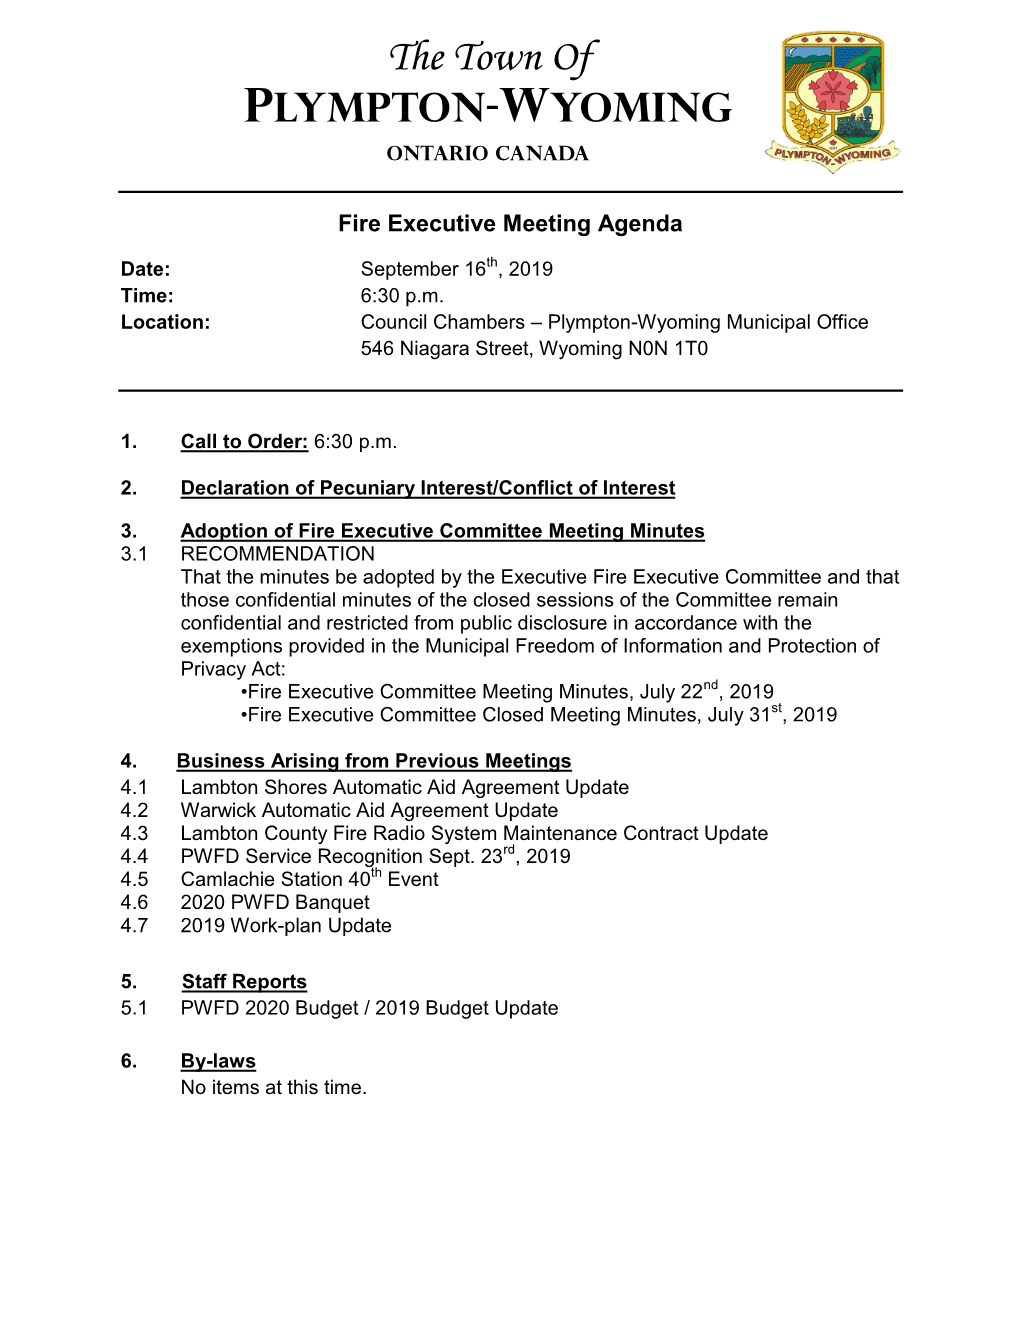 Fire Executive Agenda